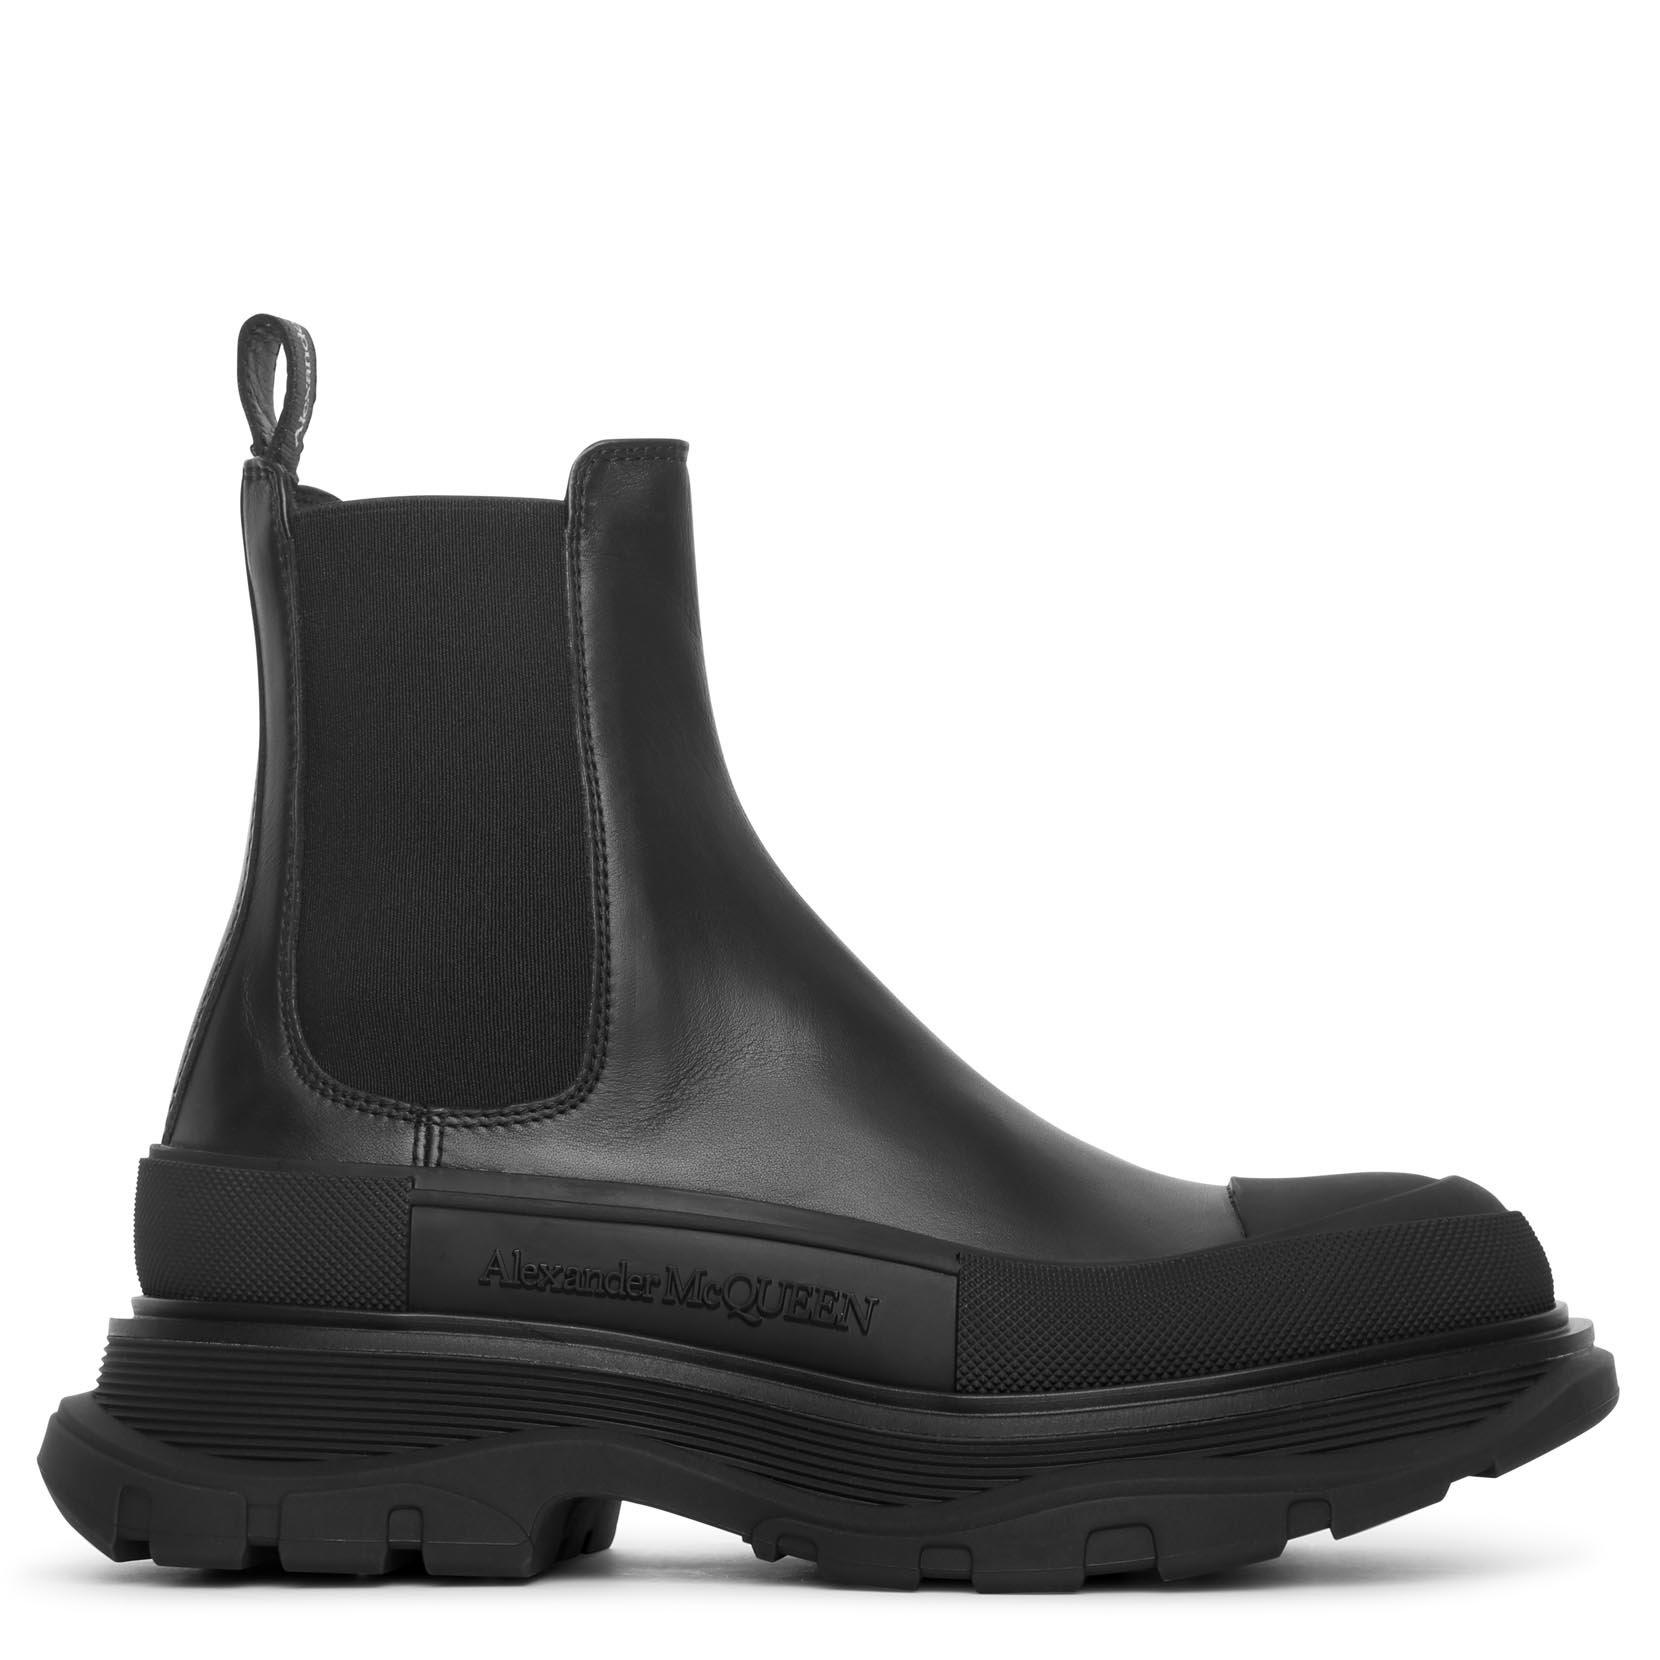 Alexander McQueen Leather Tread Slick Chelsea Boots in Black - Lyst